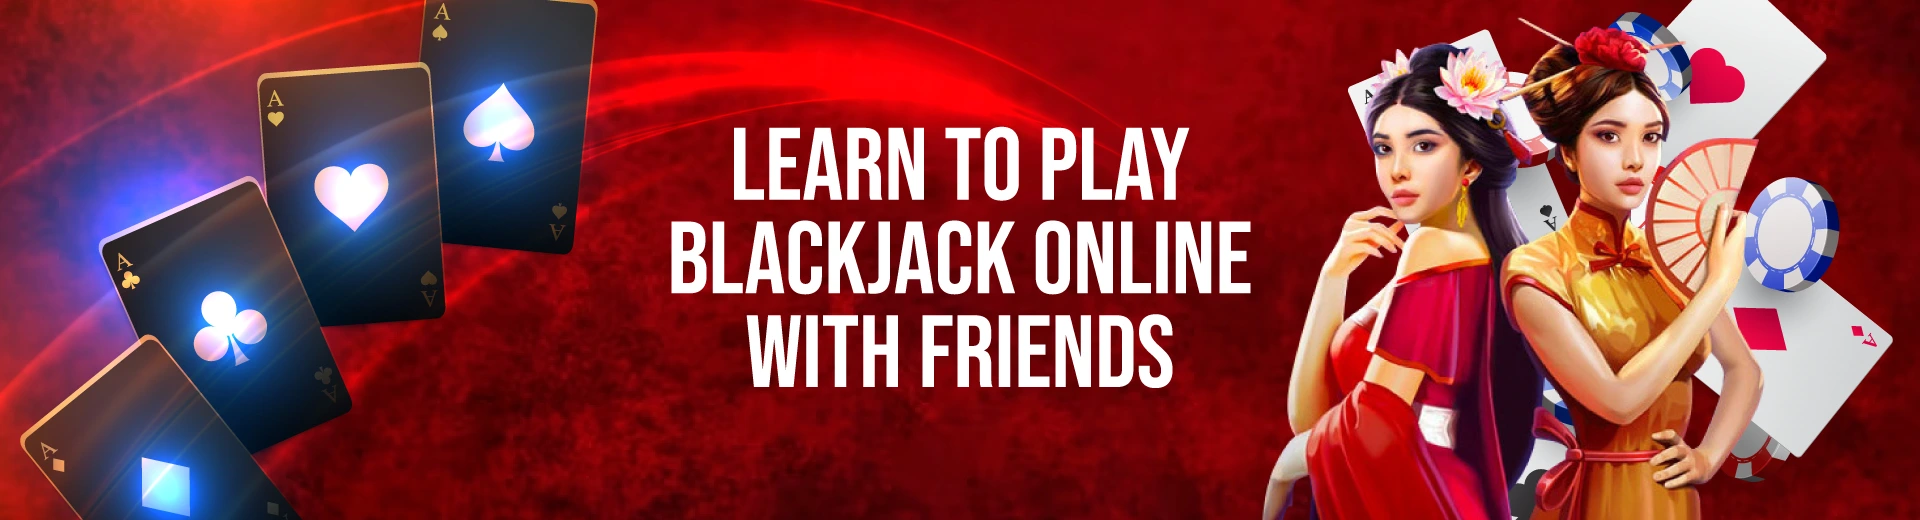 OKBet How to Play Blackjack Online with Friends